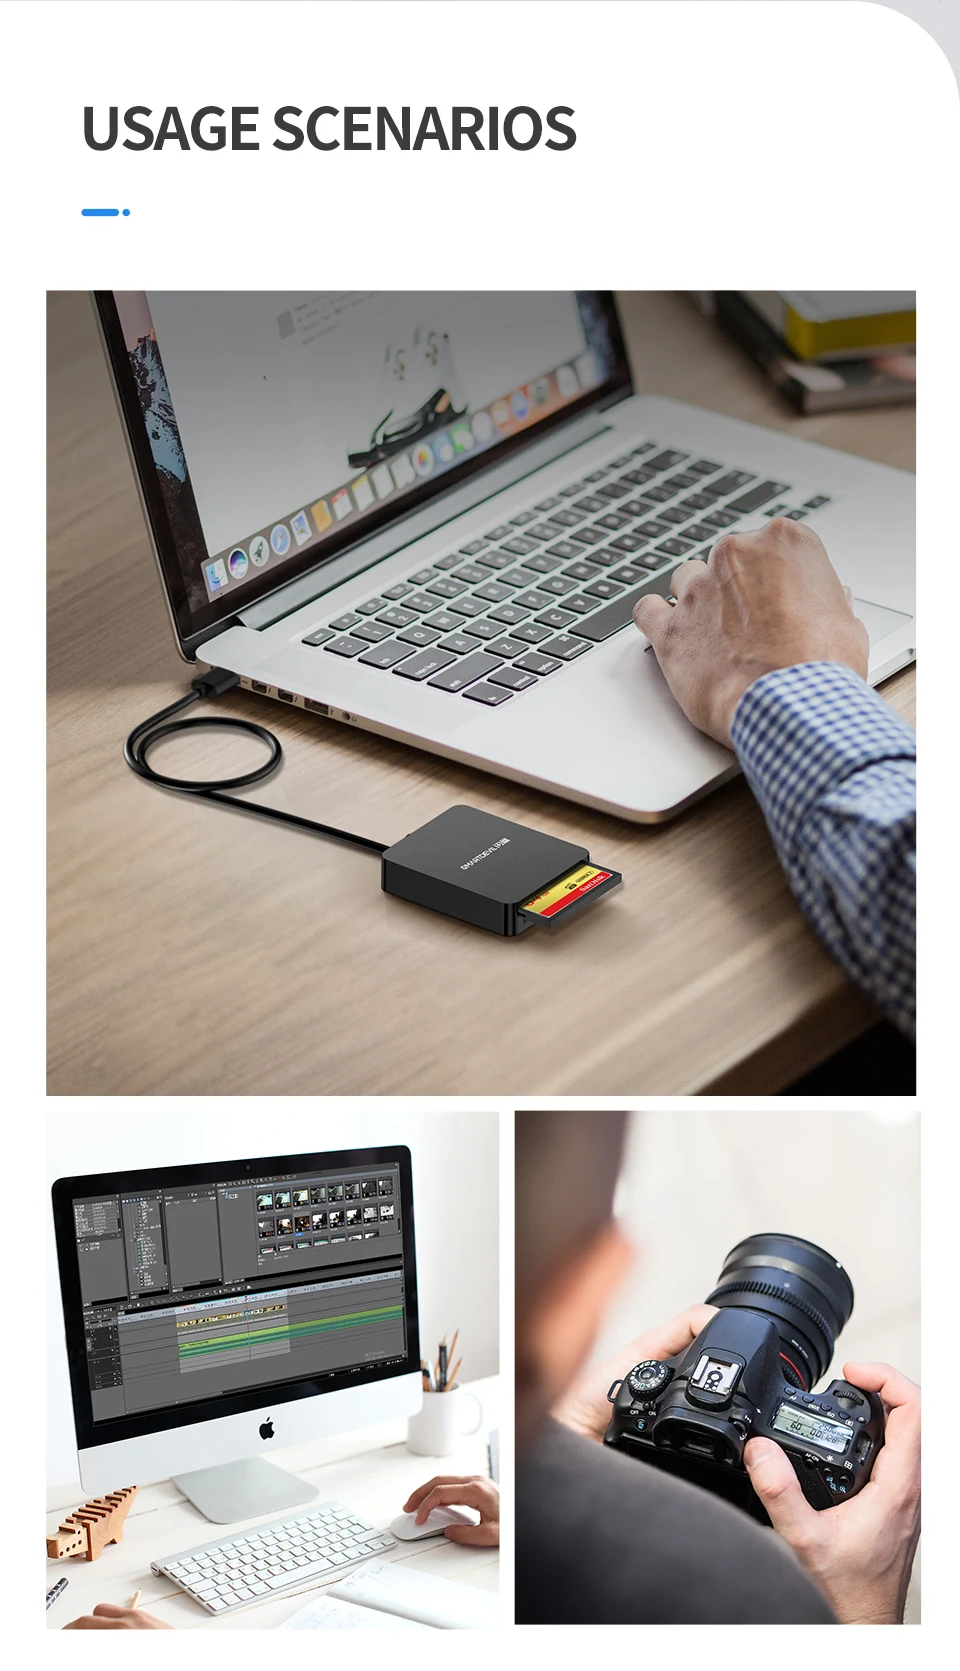 Считыватель карт SmartDevil USB 3,0 все в одном SD UCB SD TF CF/ms Compact Flash смарт-карта памяти адаптер USB OTG SD кардридер